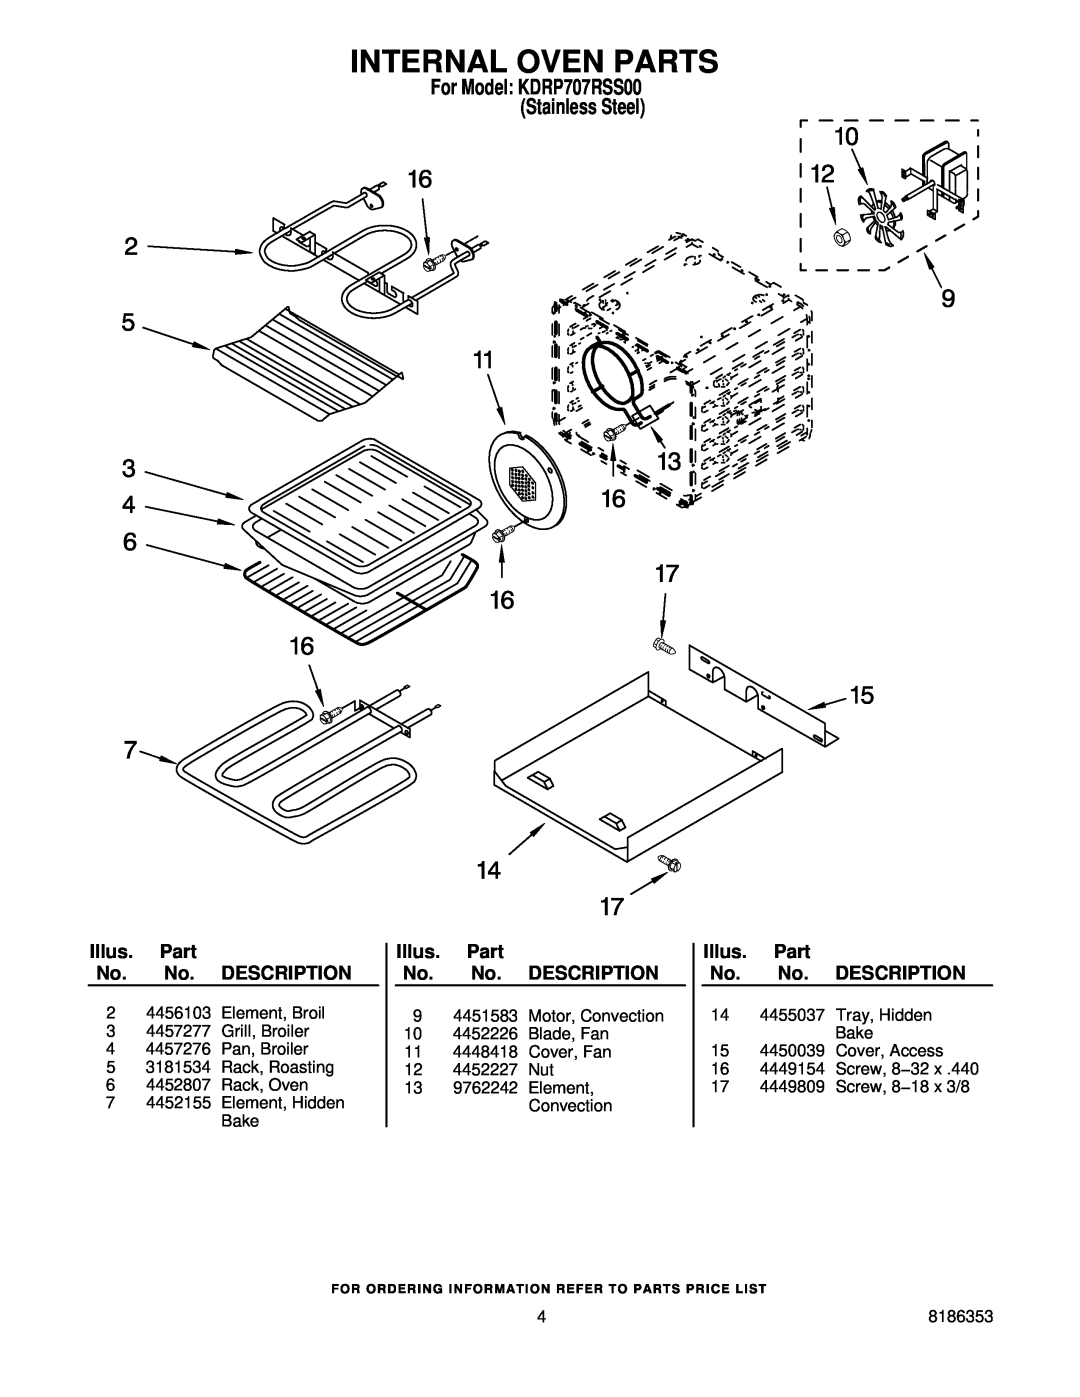 KitchenAid manual Internal Oven Parts, For Model KDRP707RSS00 Stainless Steel, Illus. Part No. No. DESCRIPTION 